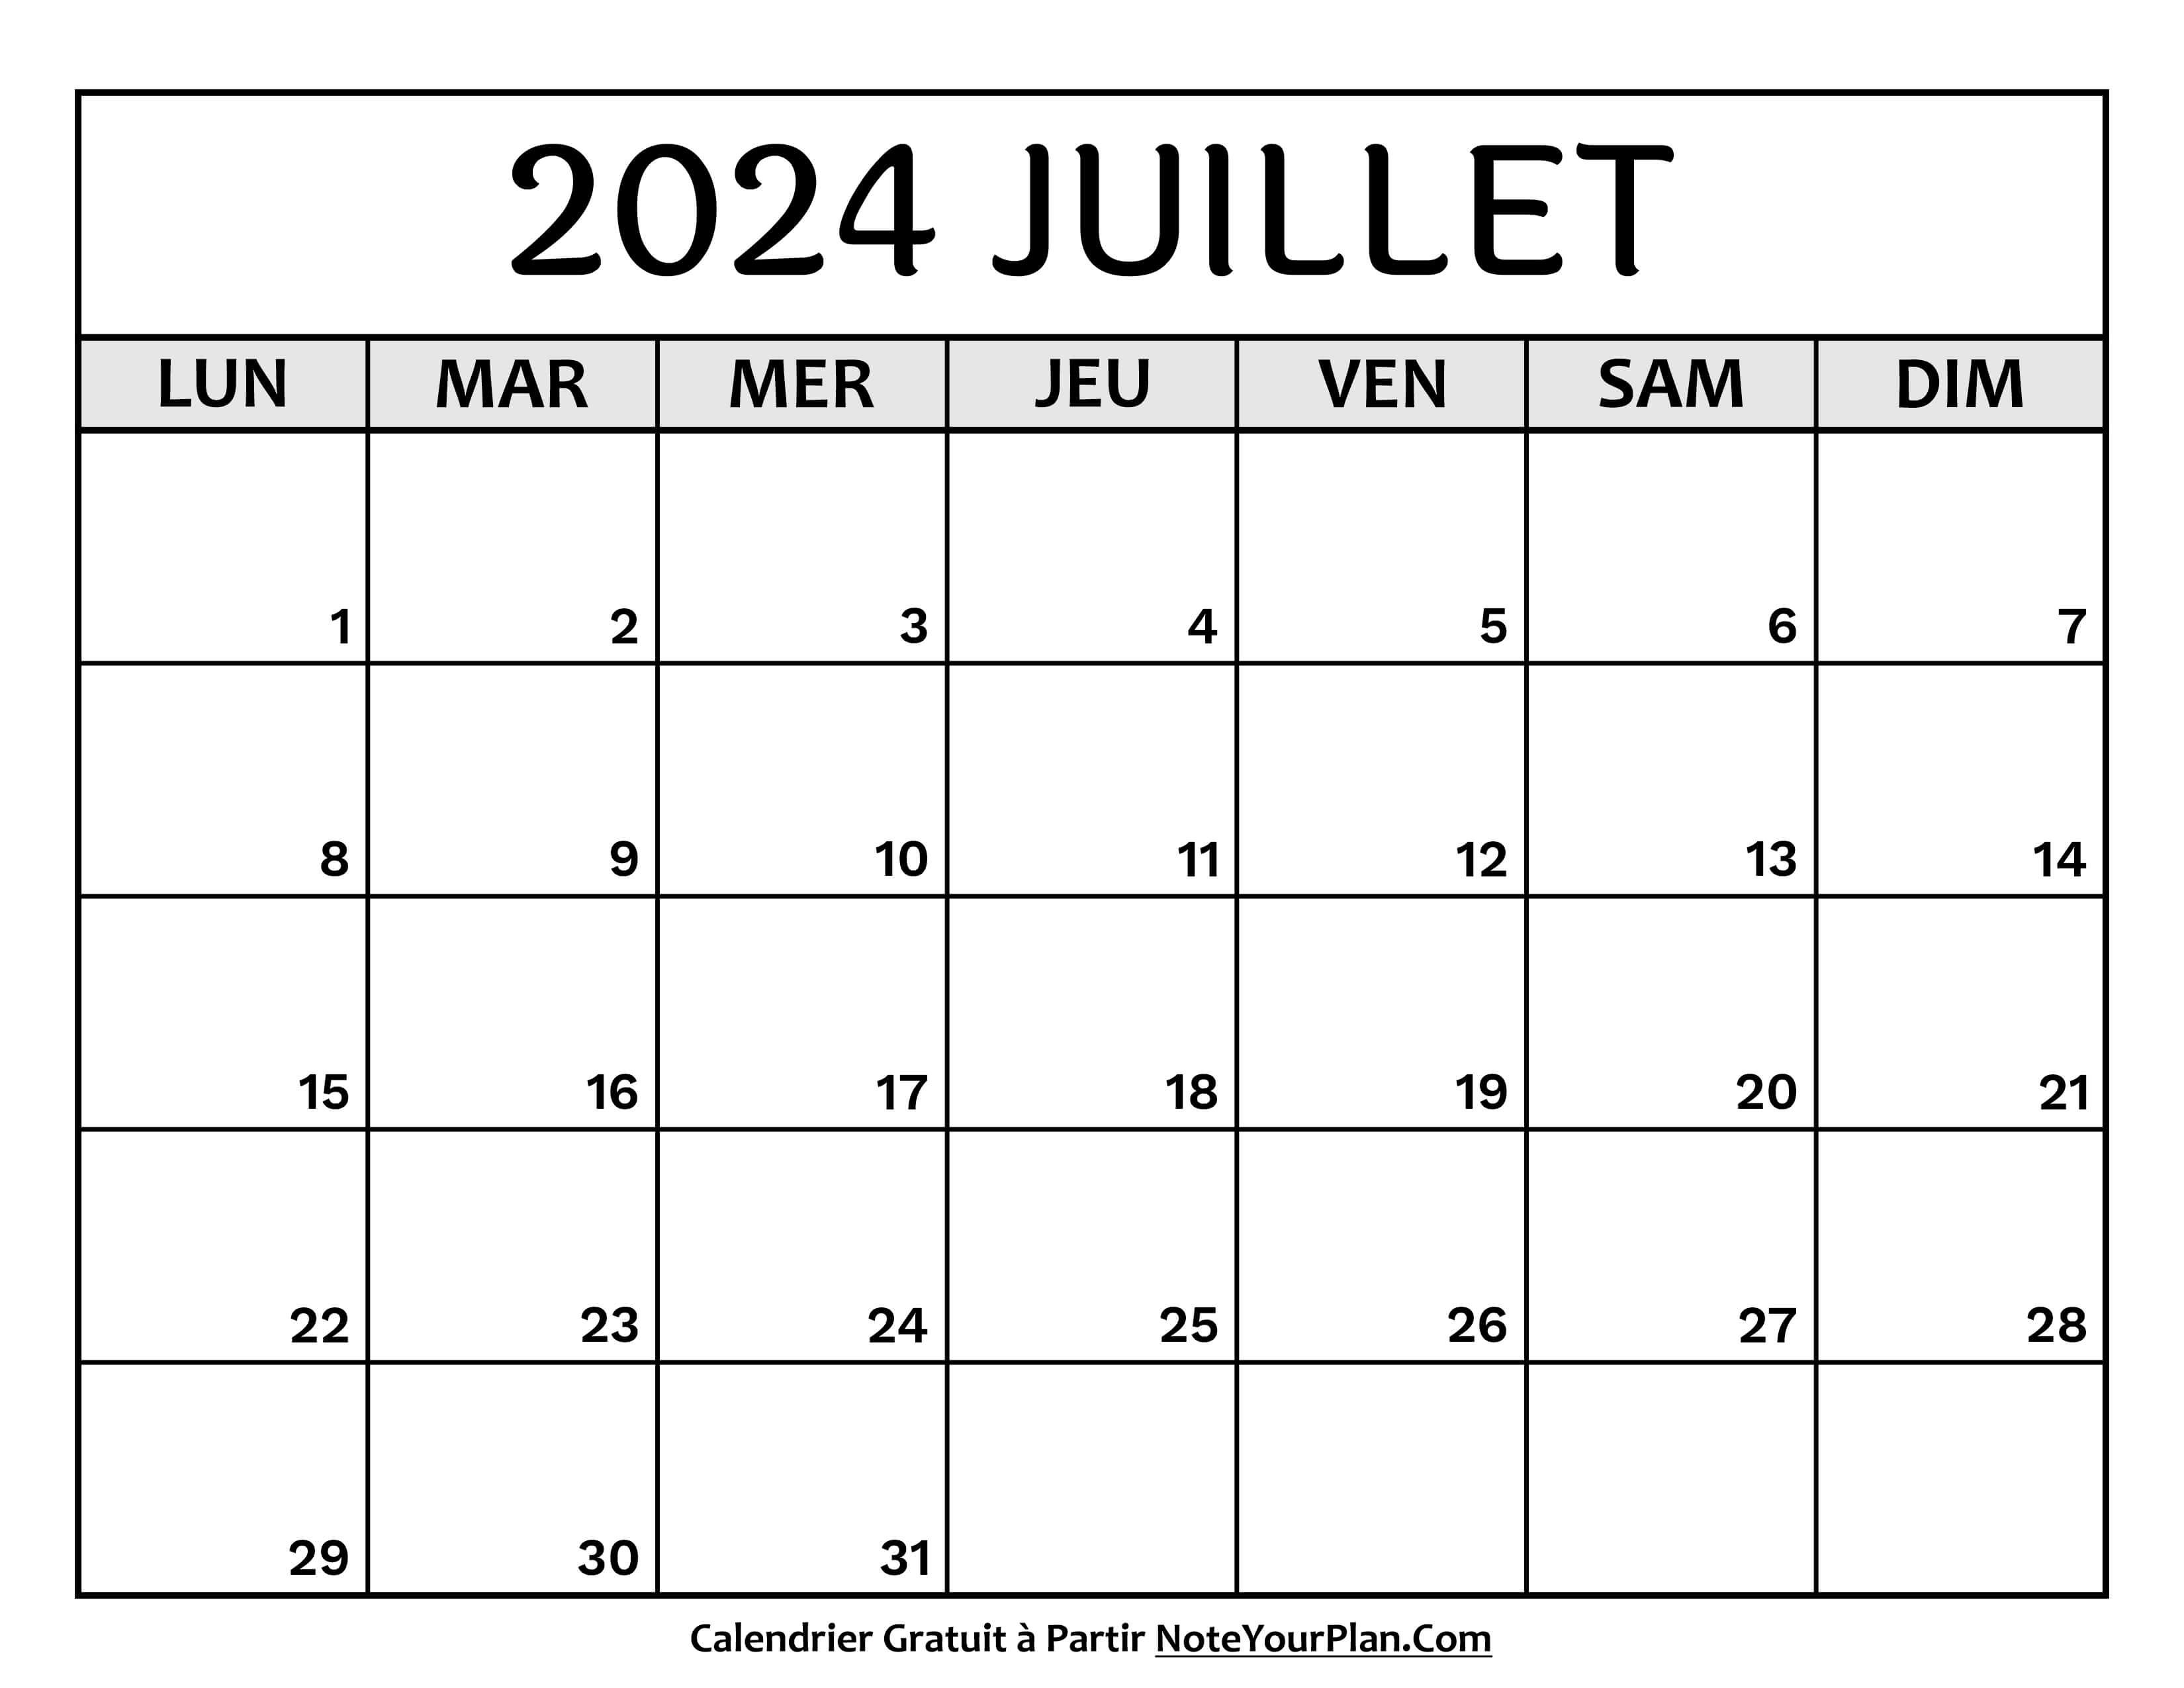 Calendrier Juillet 2024 à Imprimer